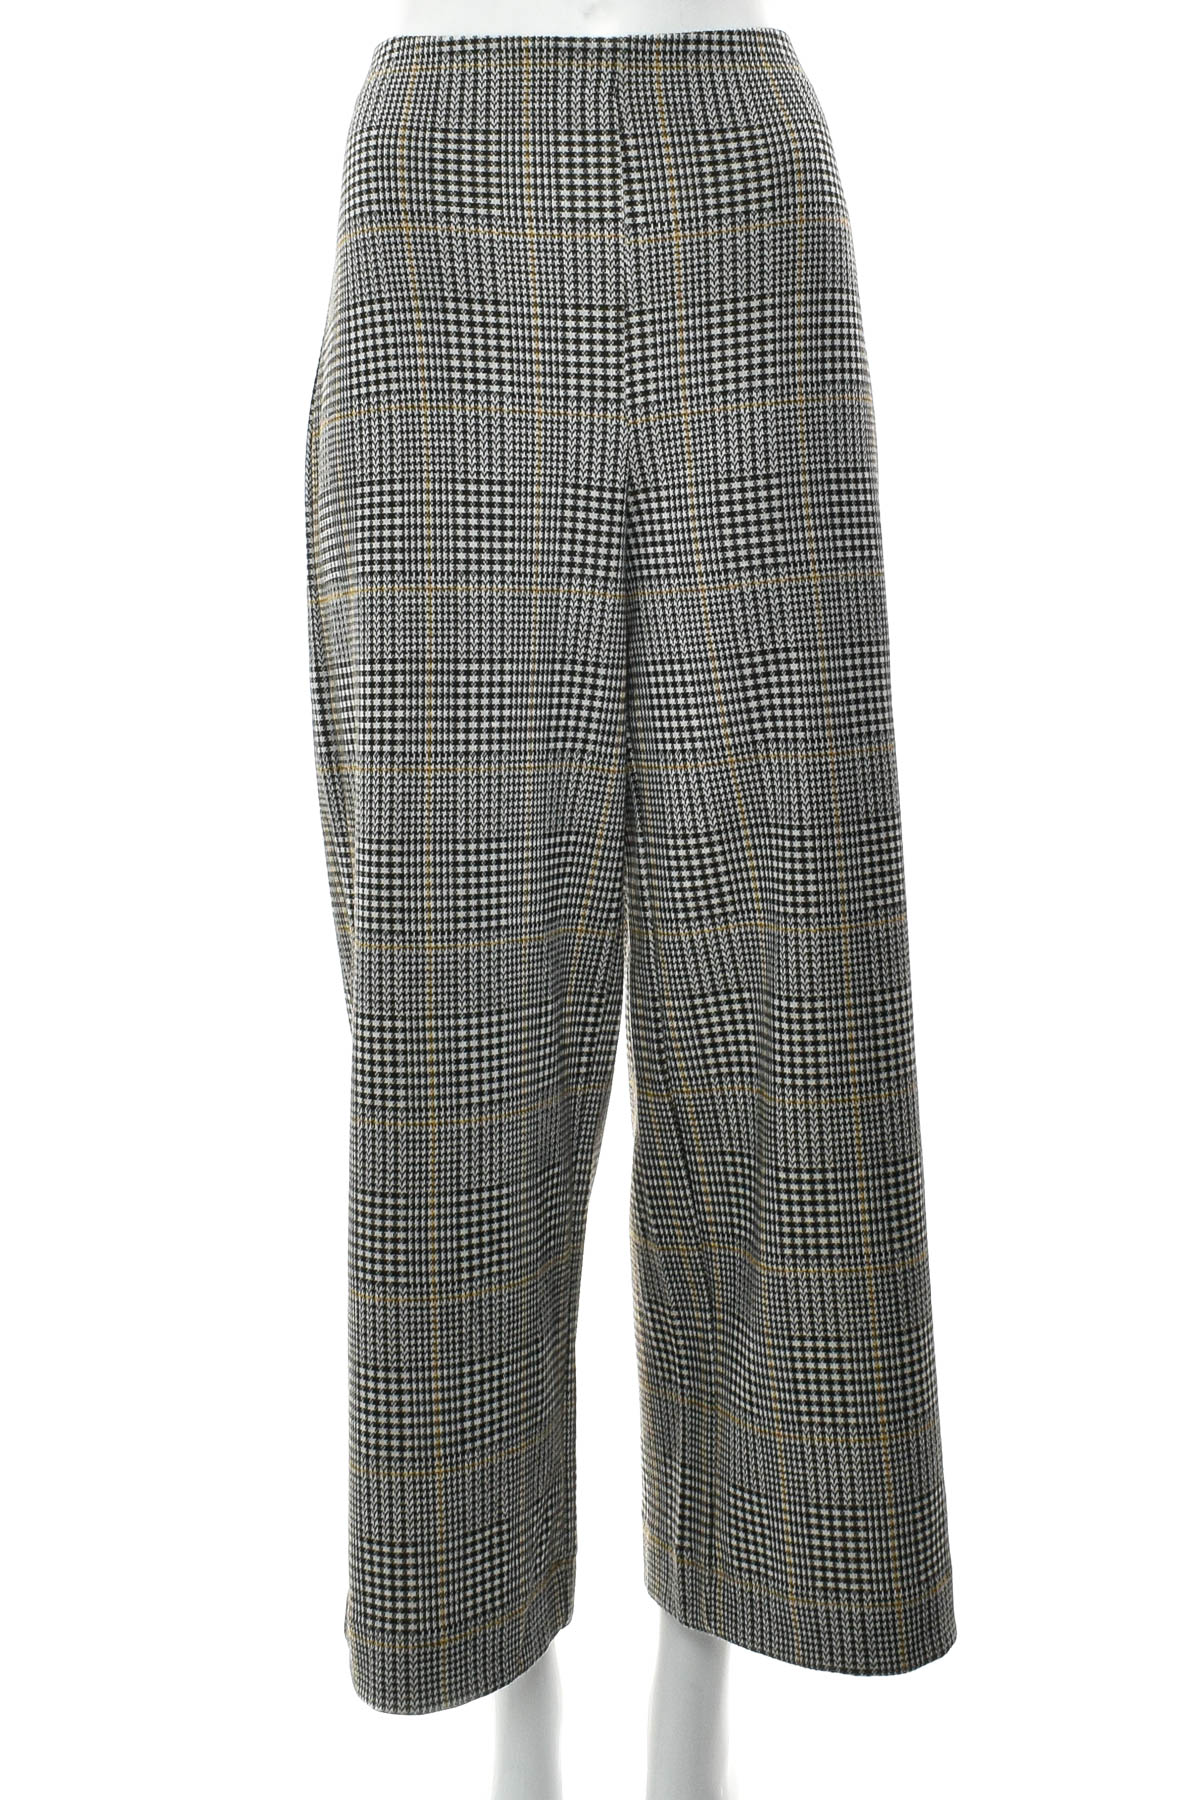 Women's trousers - H&M - 0